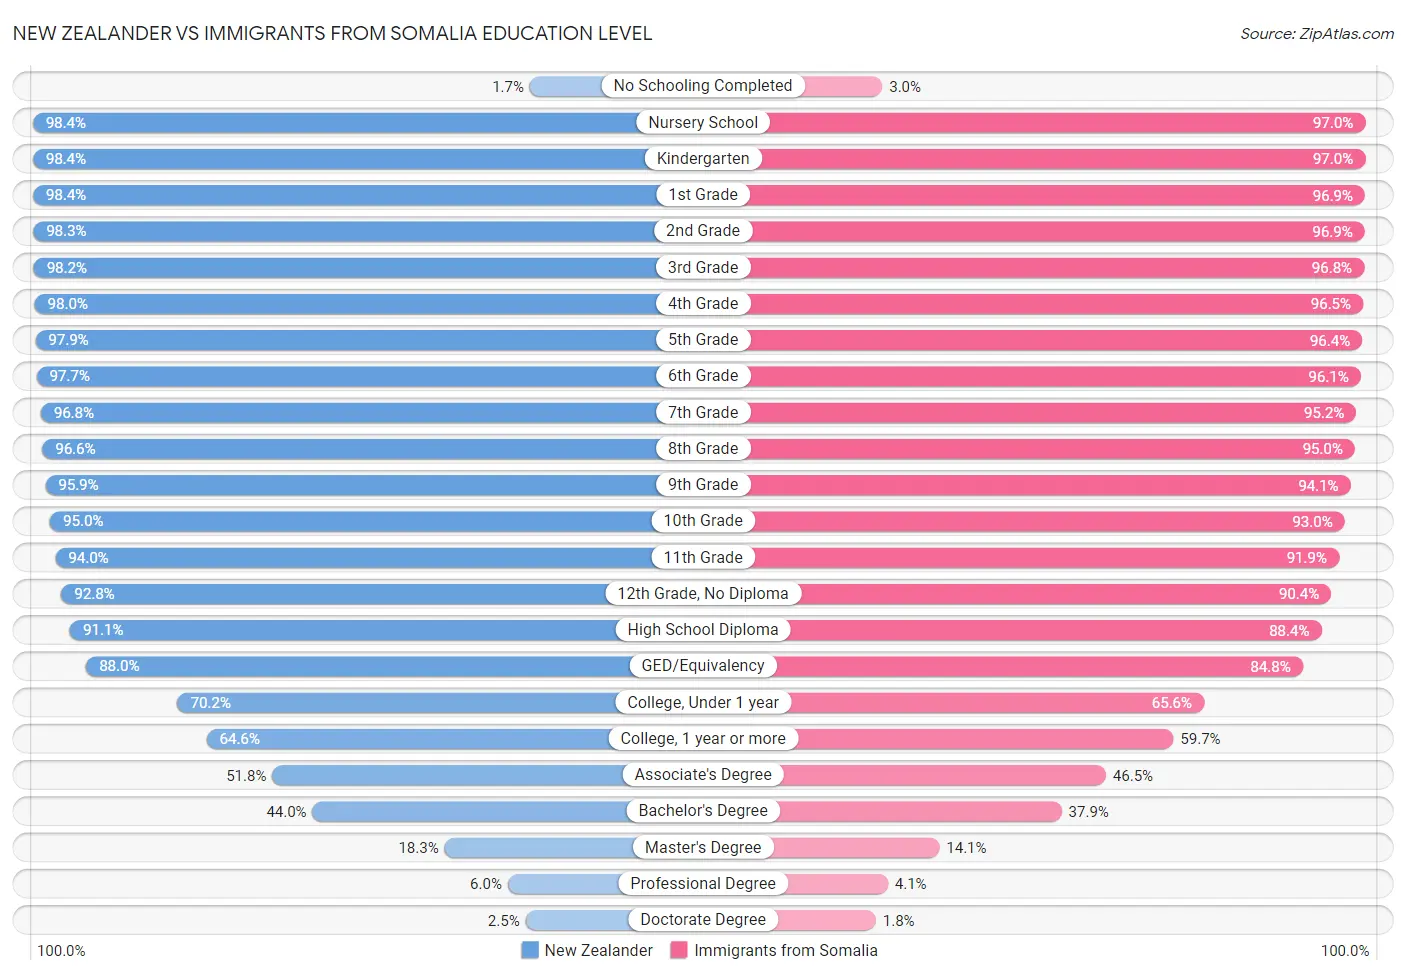 New Zealander vs Immigrants from Somalia Education Level